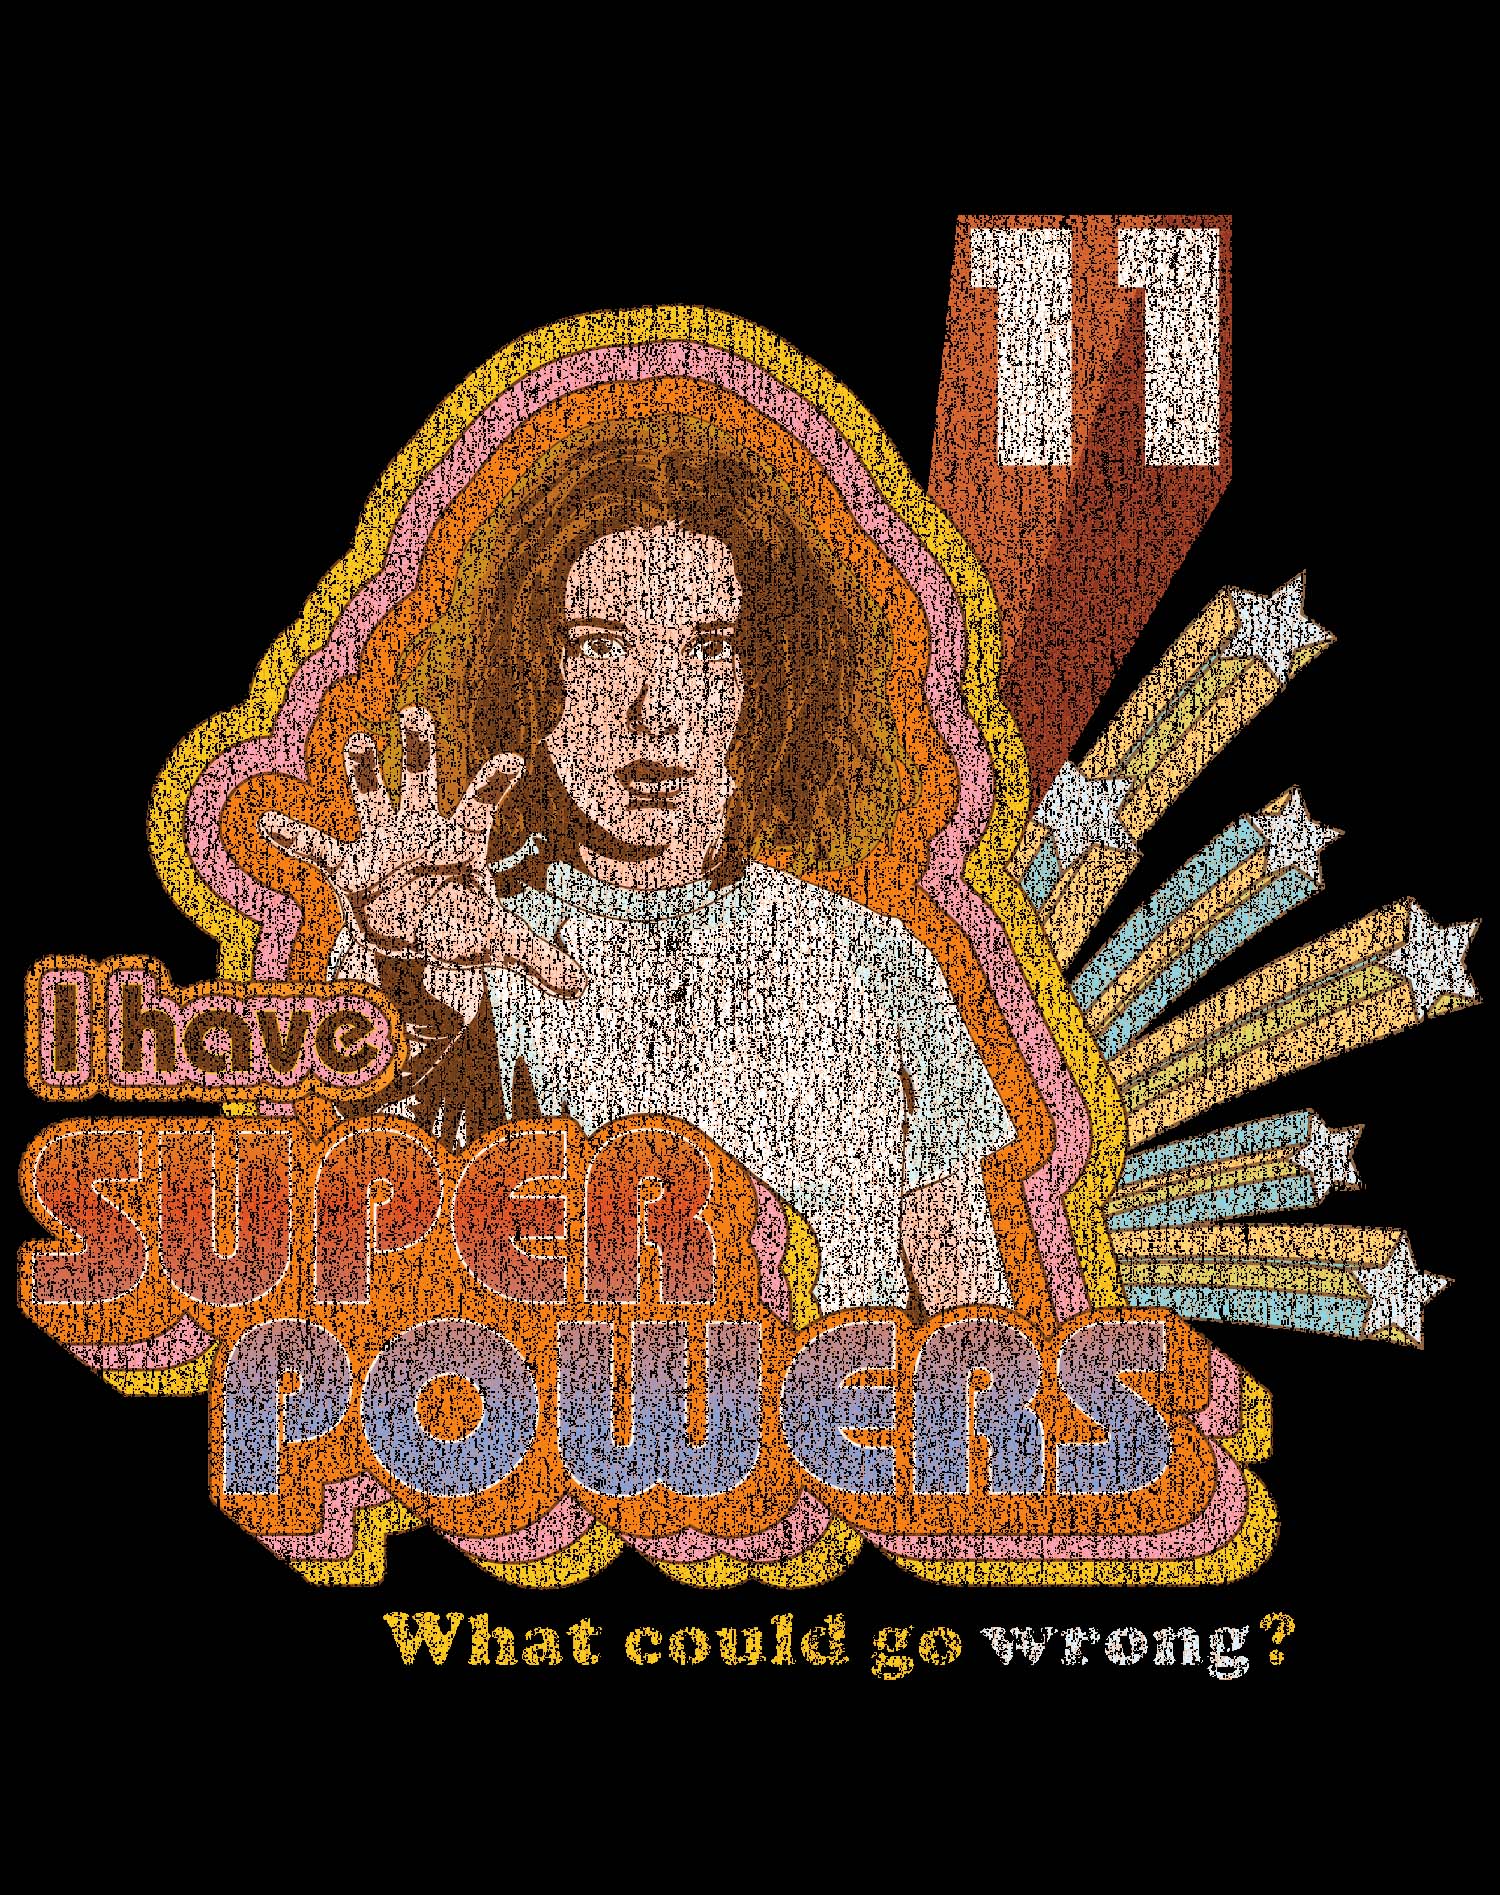 Stranger Things Super Powers Official Women's T-Shirt